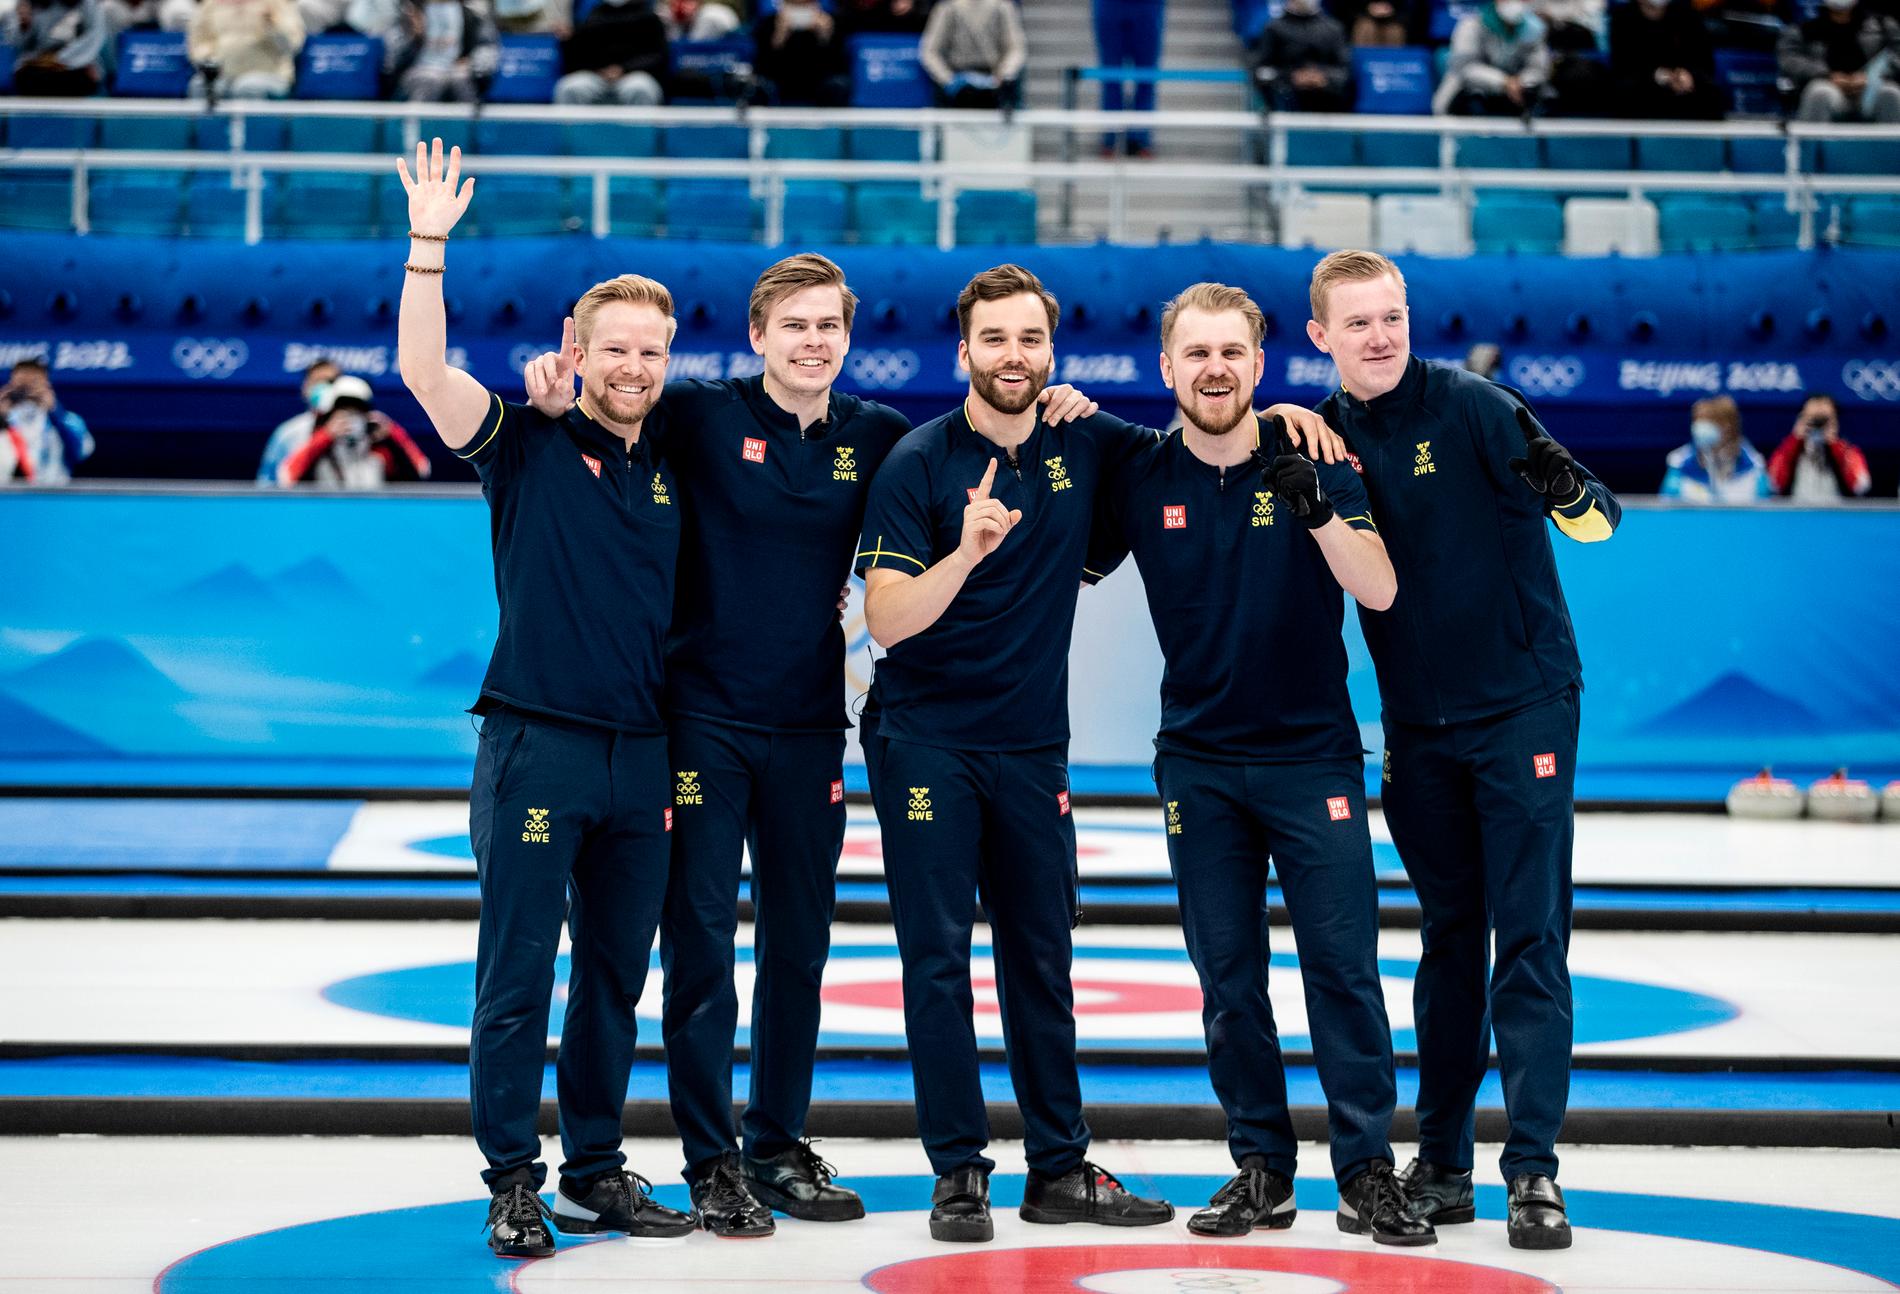 Sveriges lag Edin med Niklas Edin, Christoffer Sundgren, Oskar Eriksson, Rasmus Wranå och Daniel Magnusson efter OS-guldet.